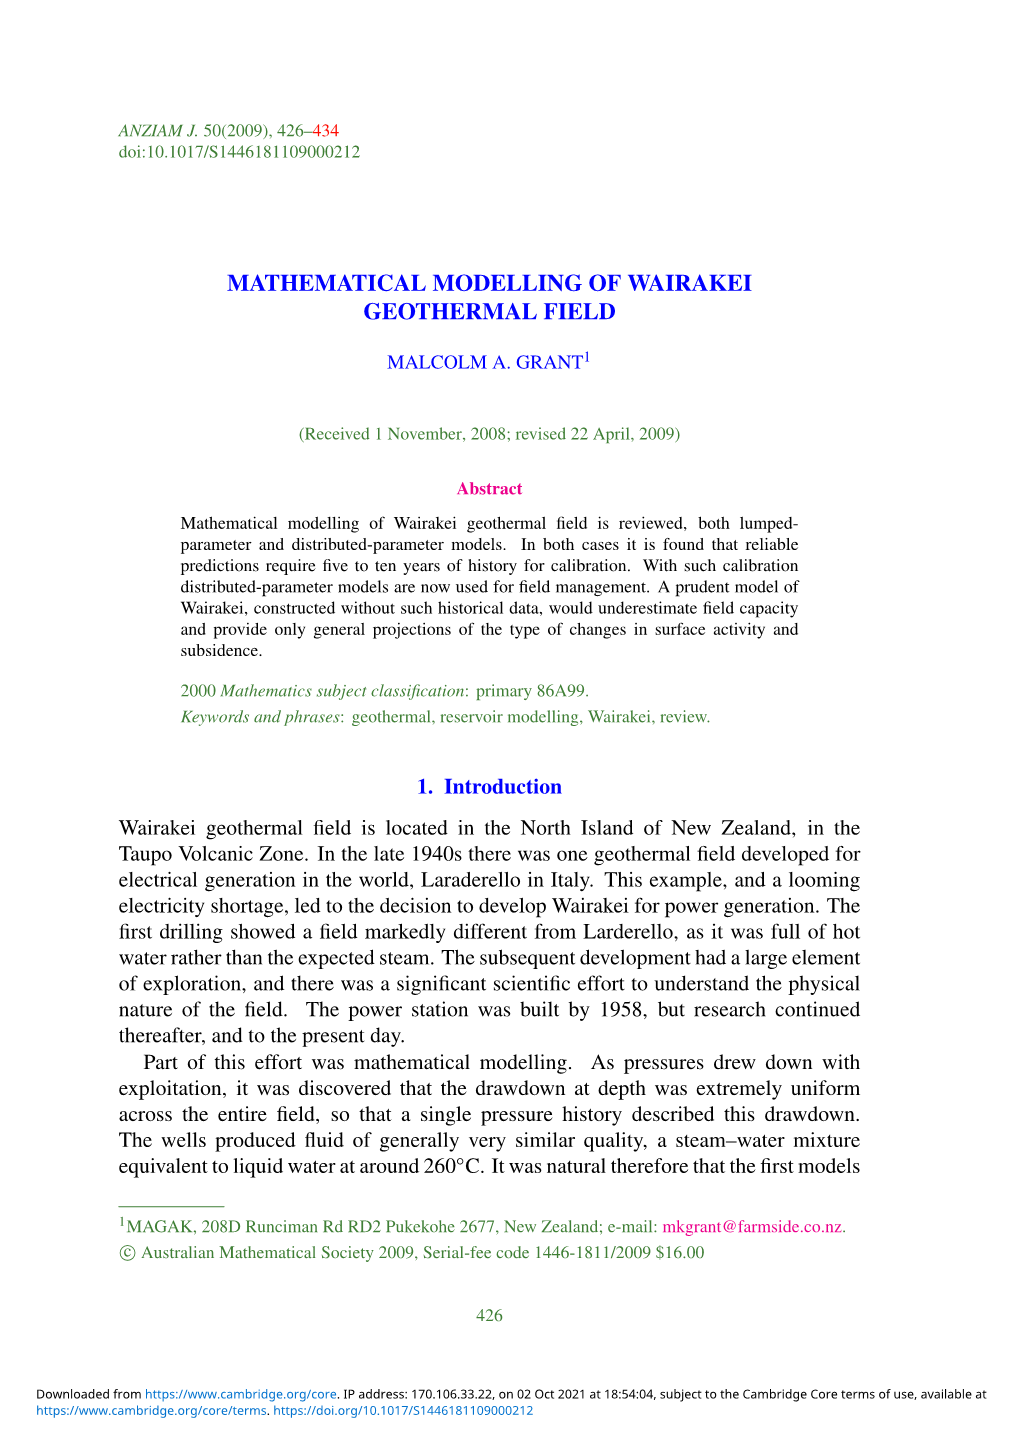 Mathematical Modelling of Wairakei Geothermal Field